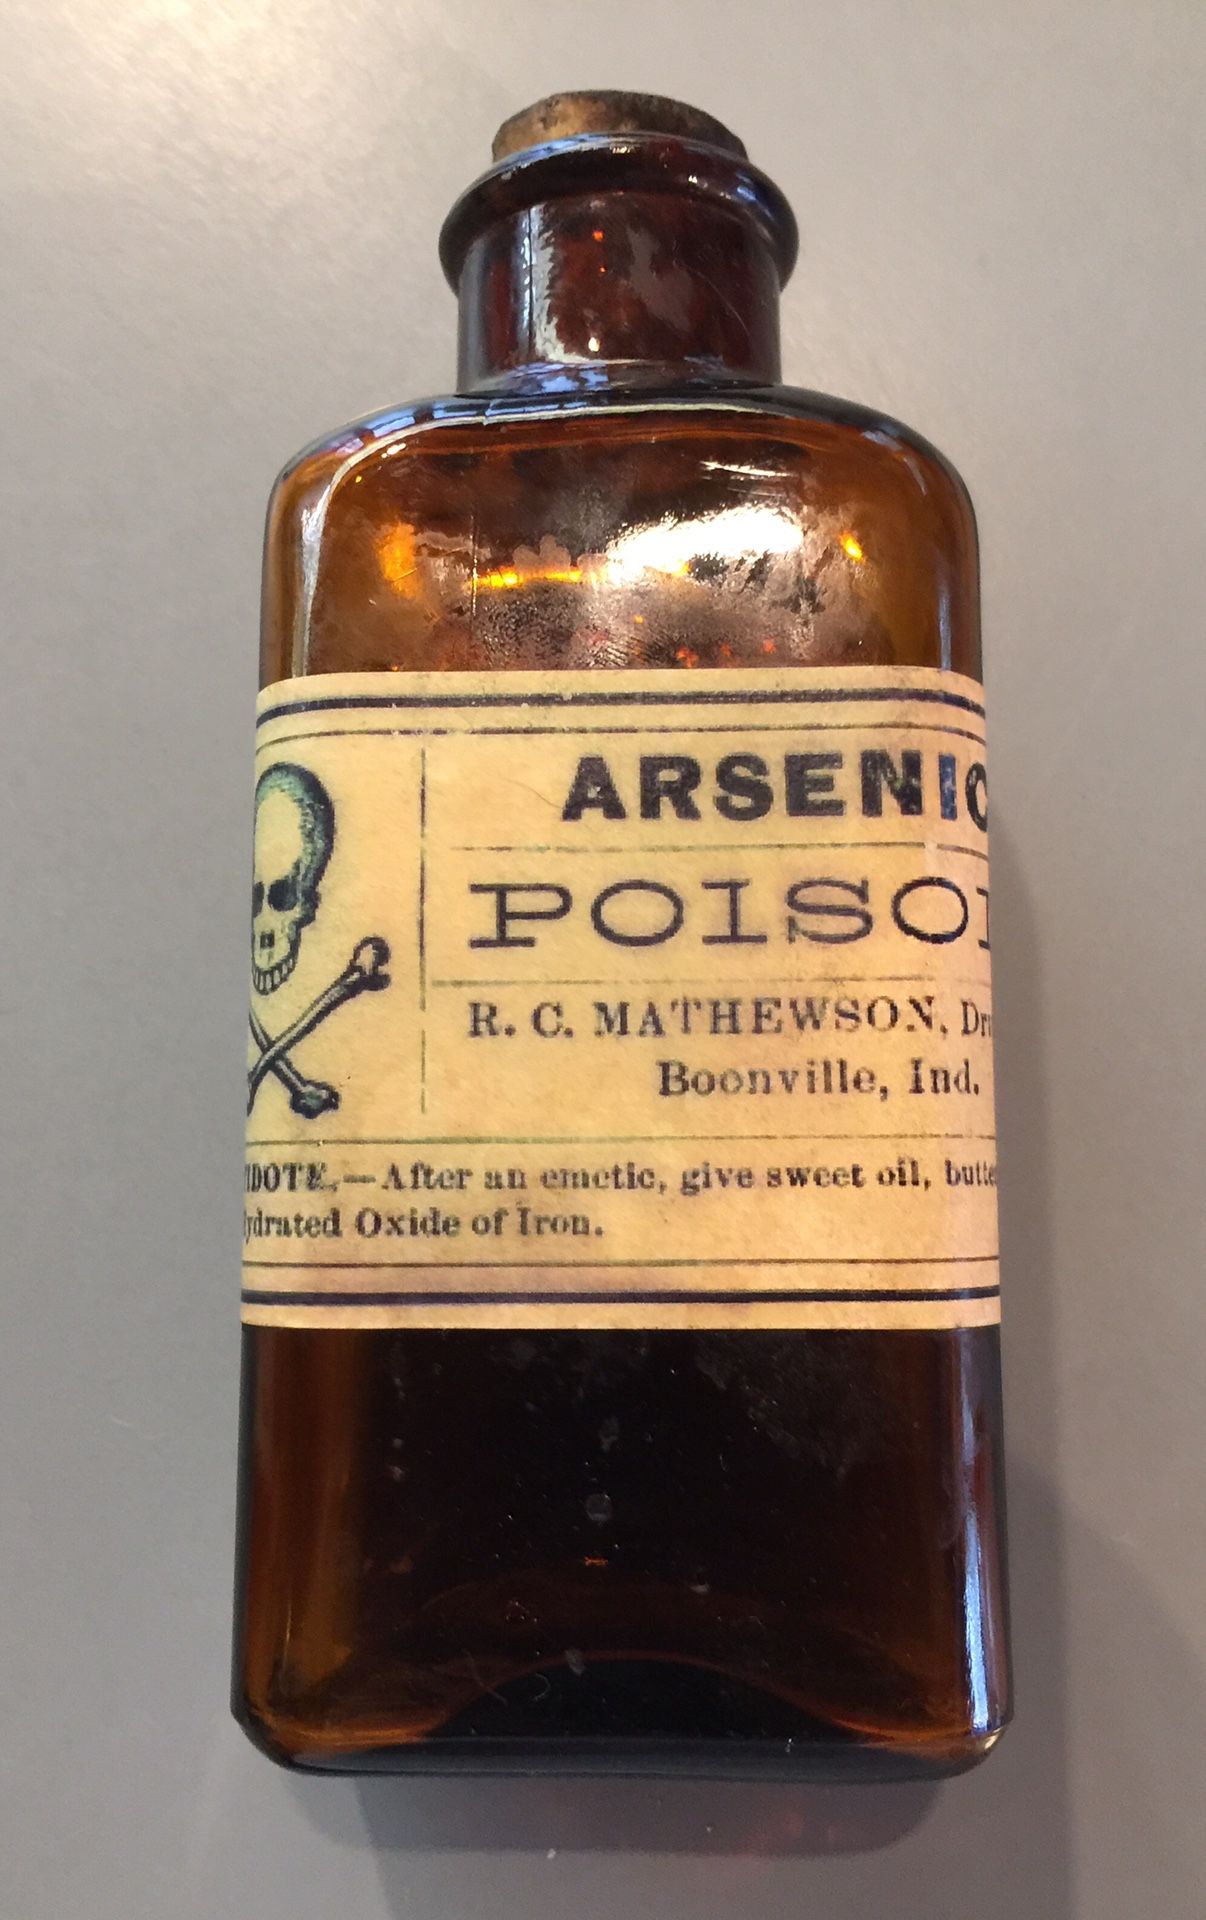 Antique poison bottle with original label, bottle and cork.